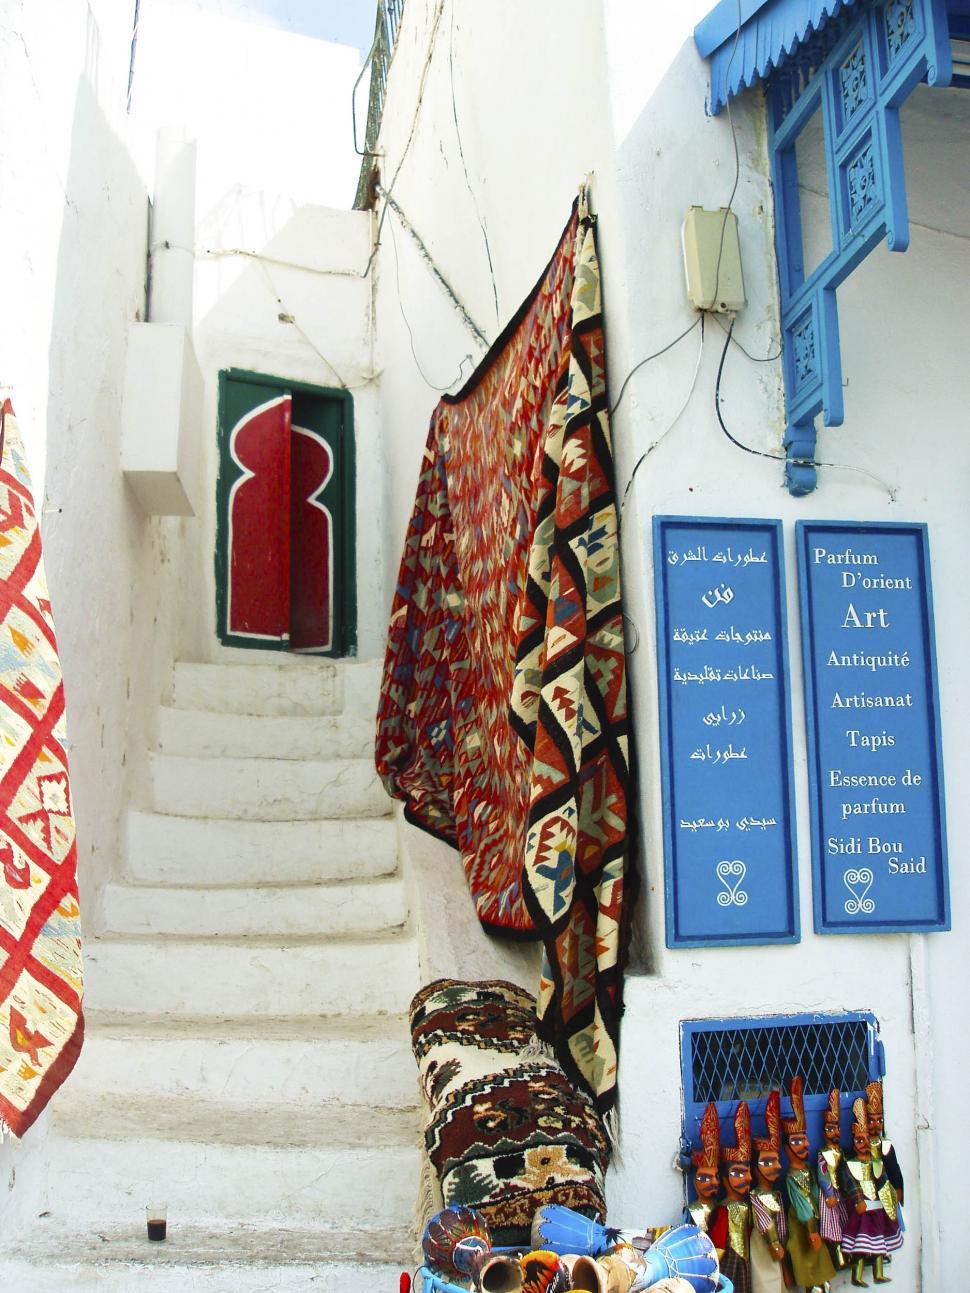 Free Image of Souvenir Shop in Tunisia 